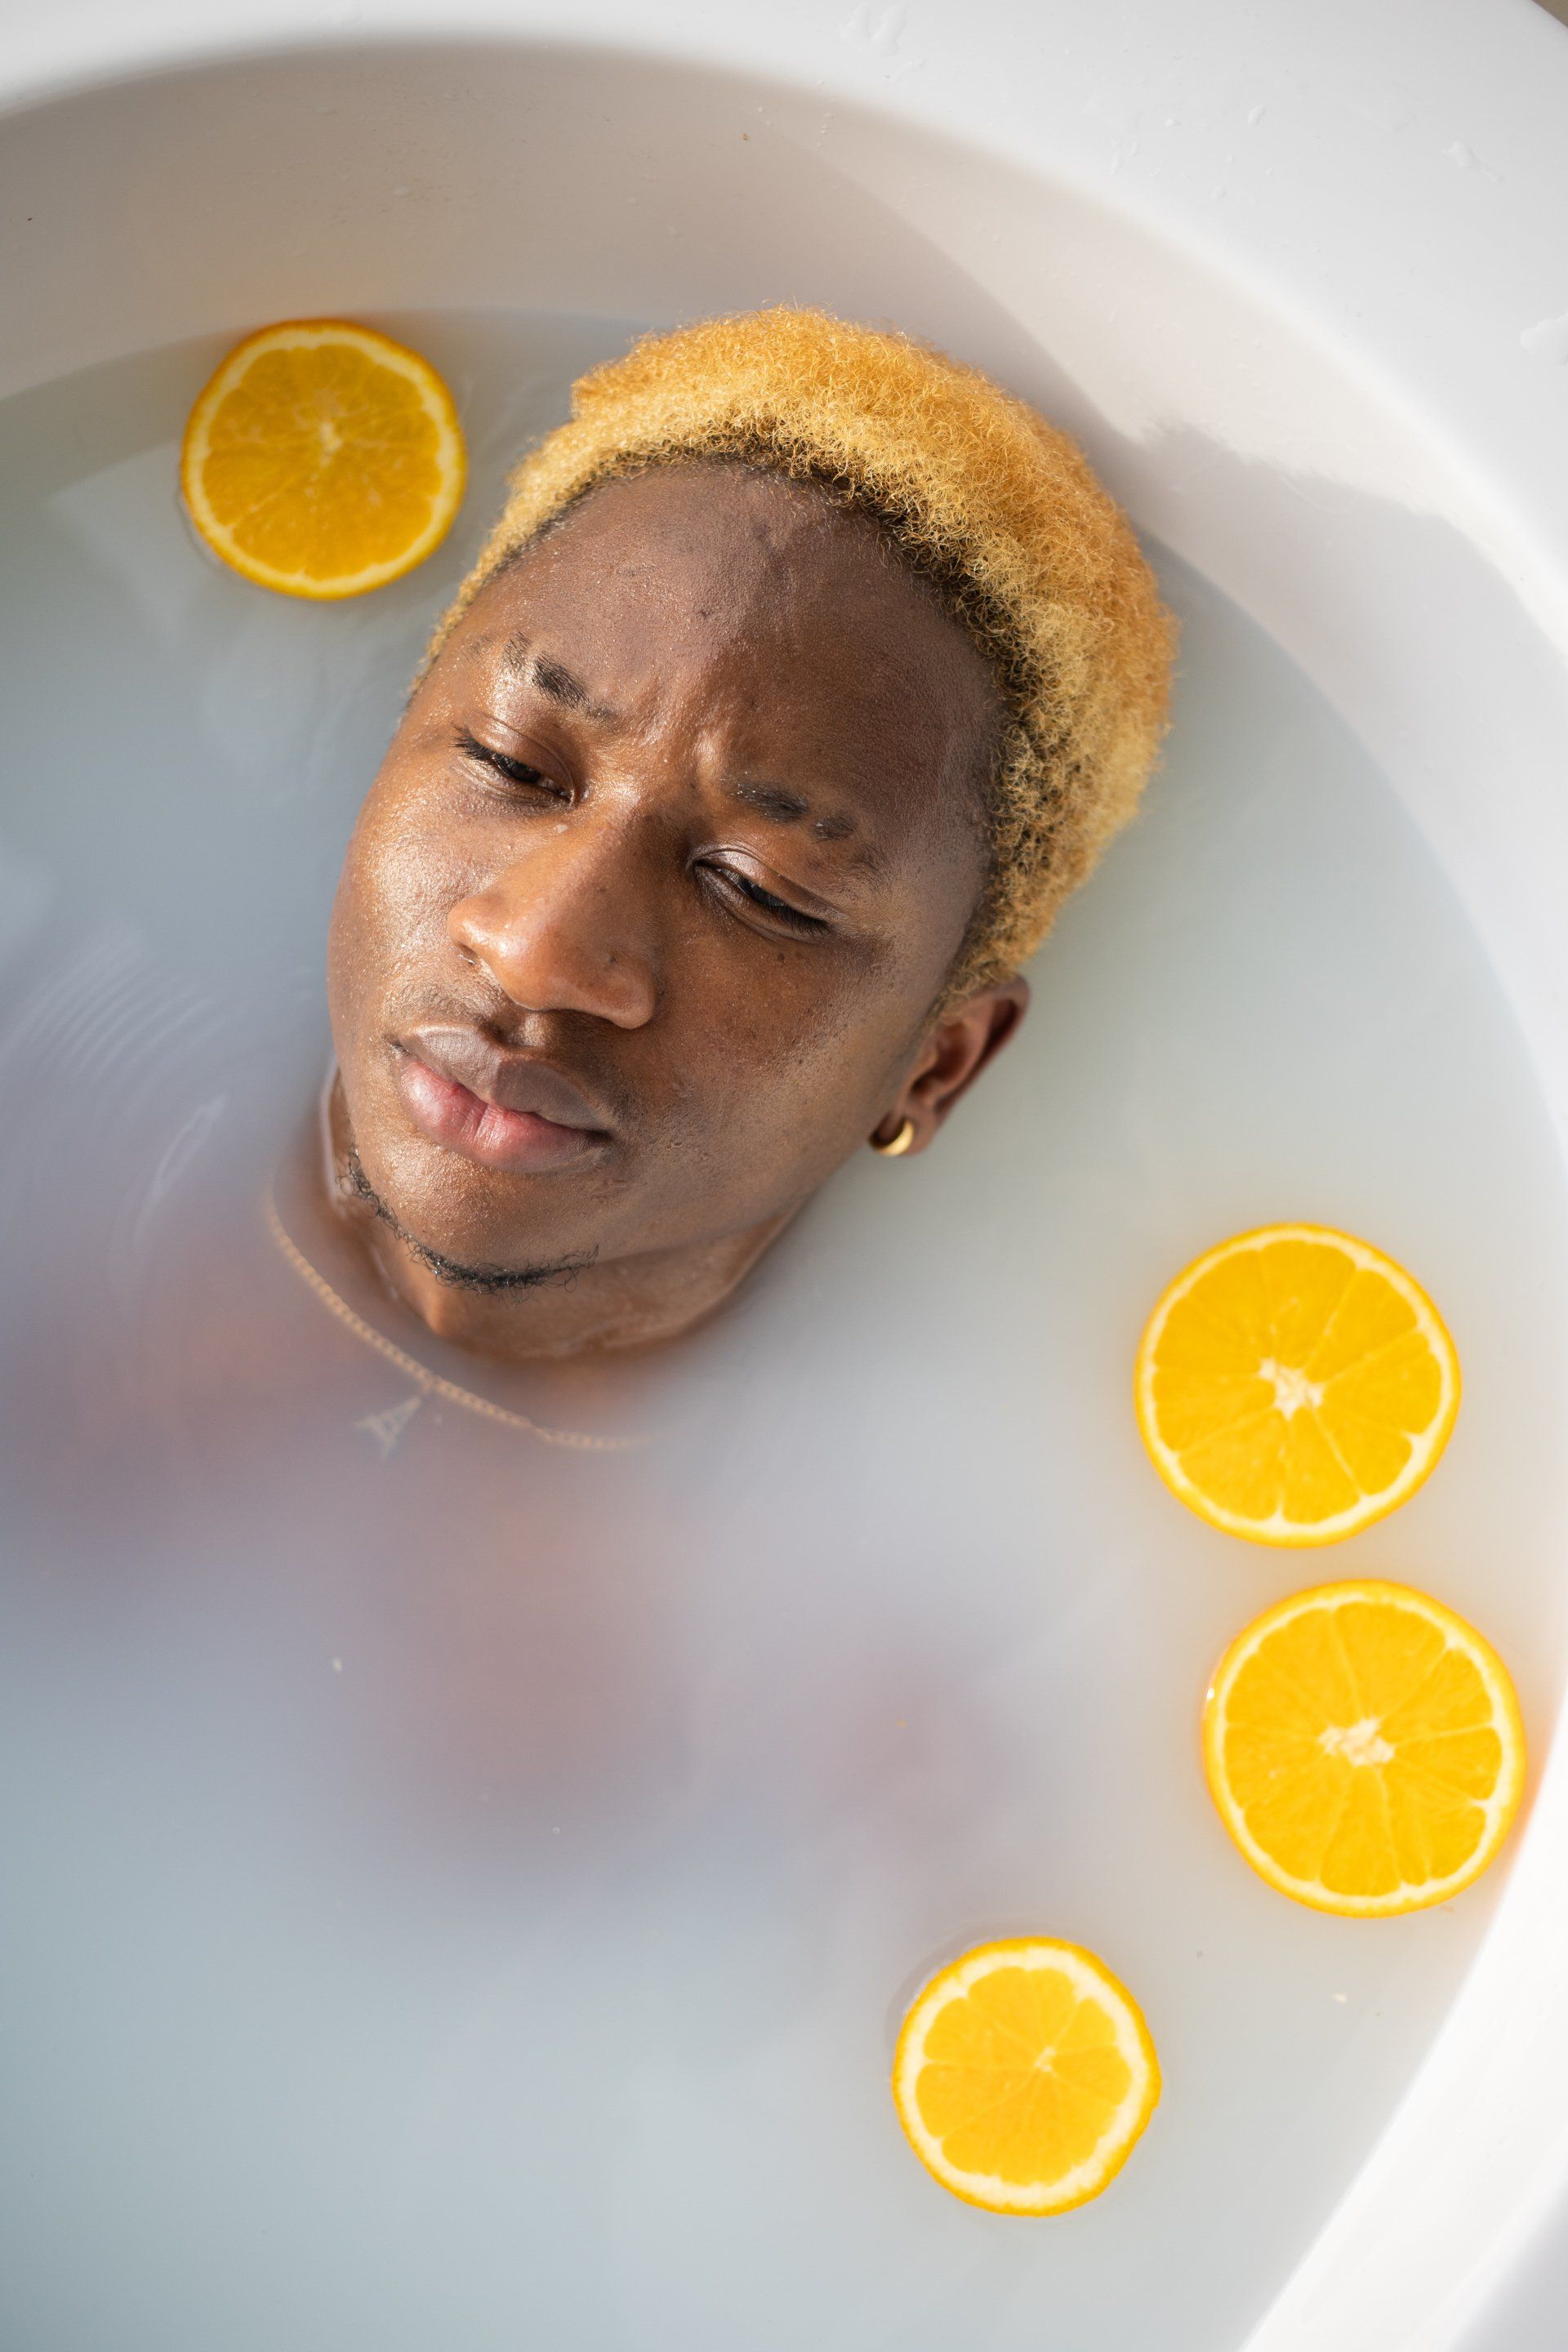 Man in bath with orange slices